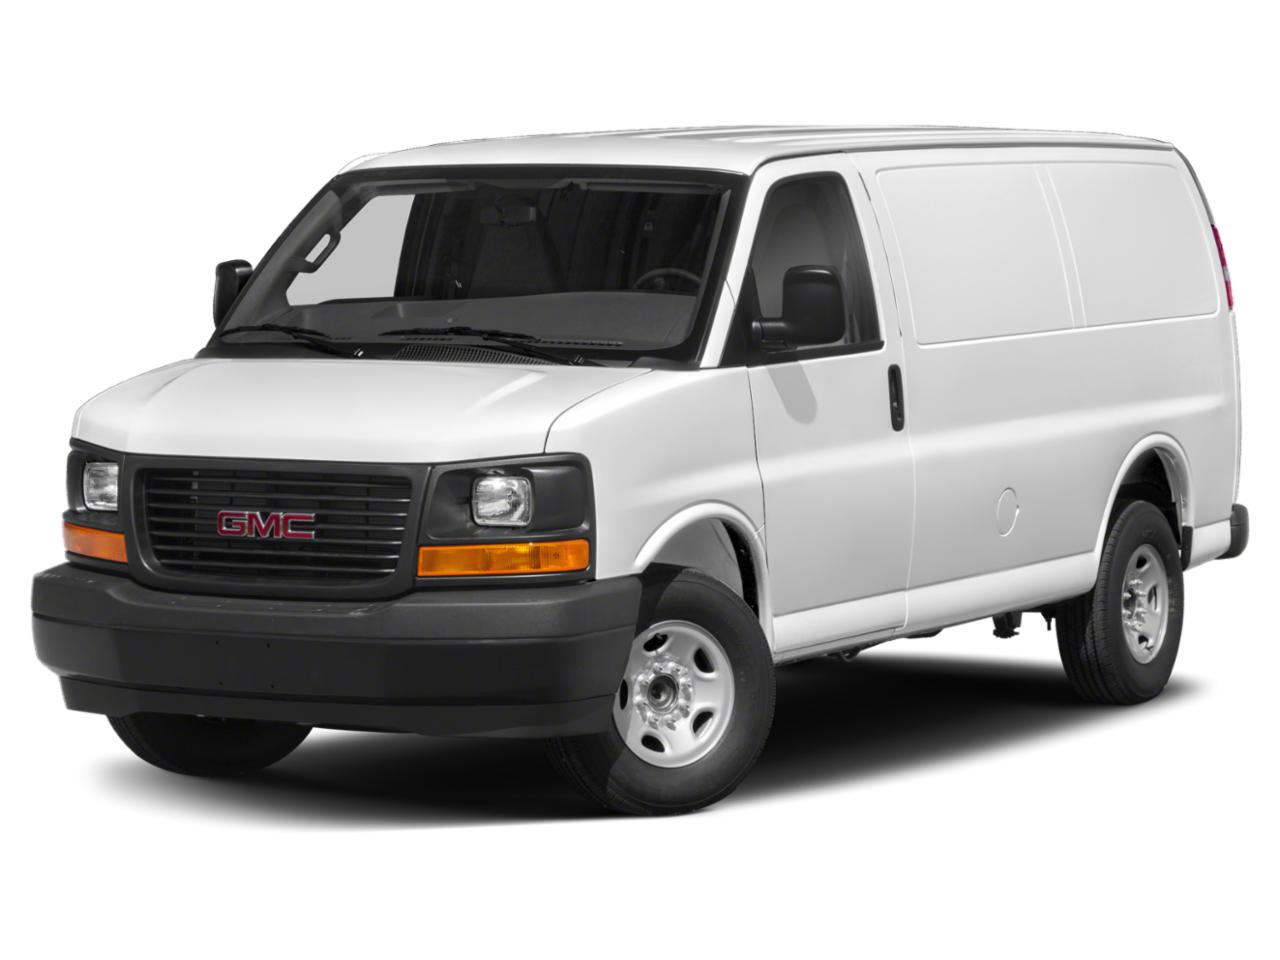 white cargo van for sale